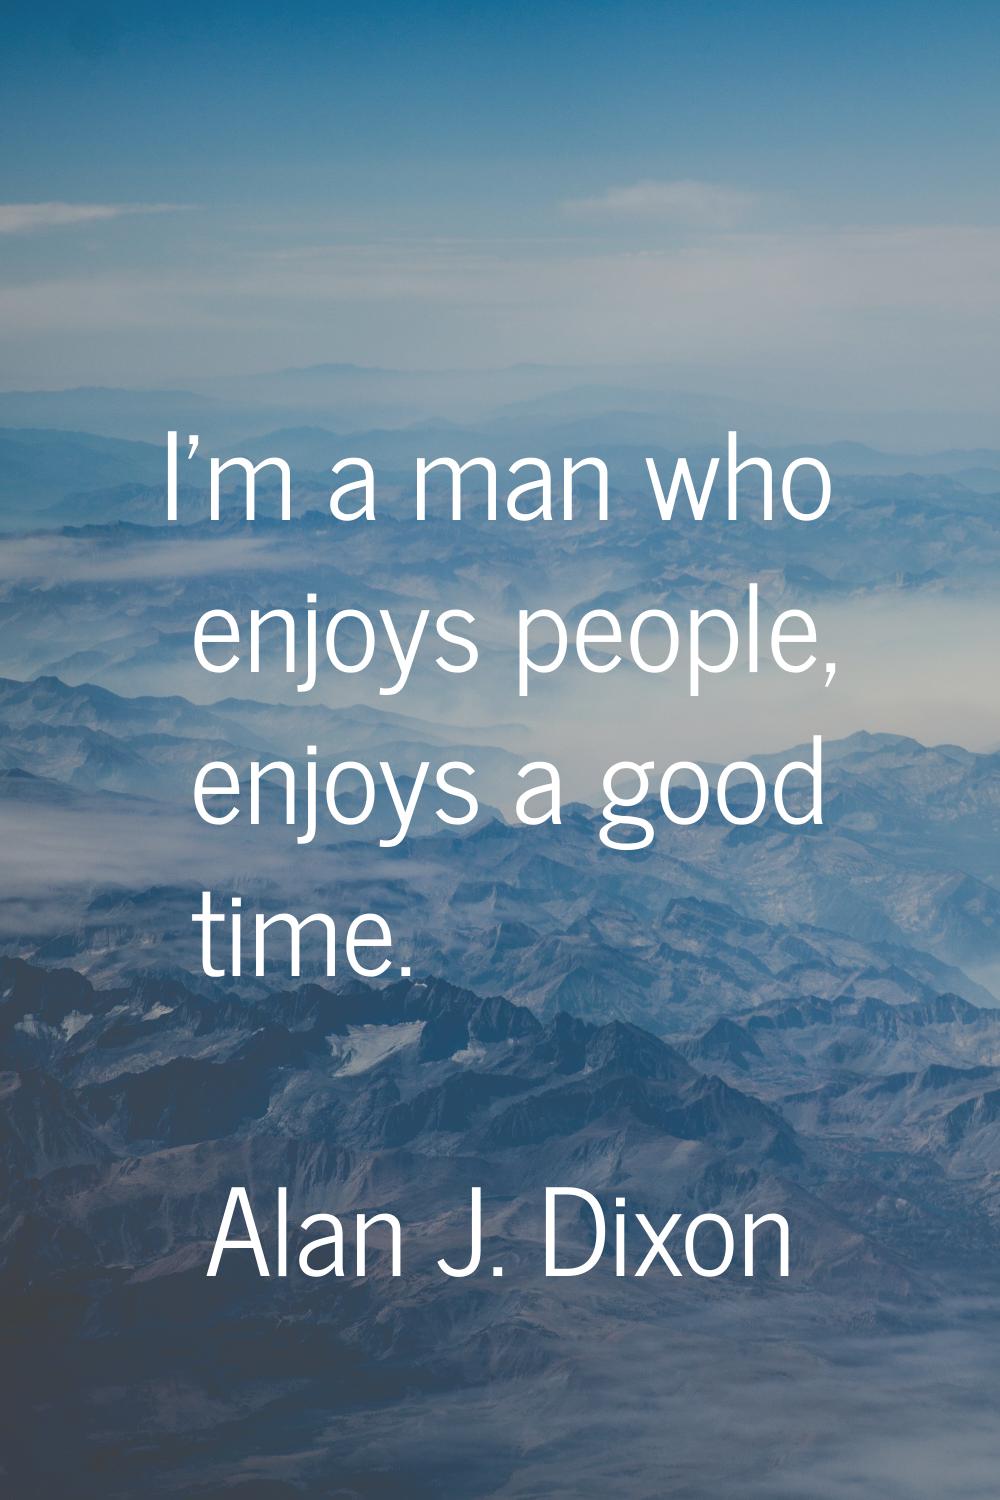 I'm a man who enjoys people, enjoys a good time.